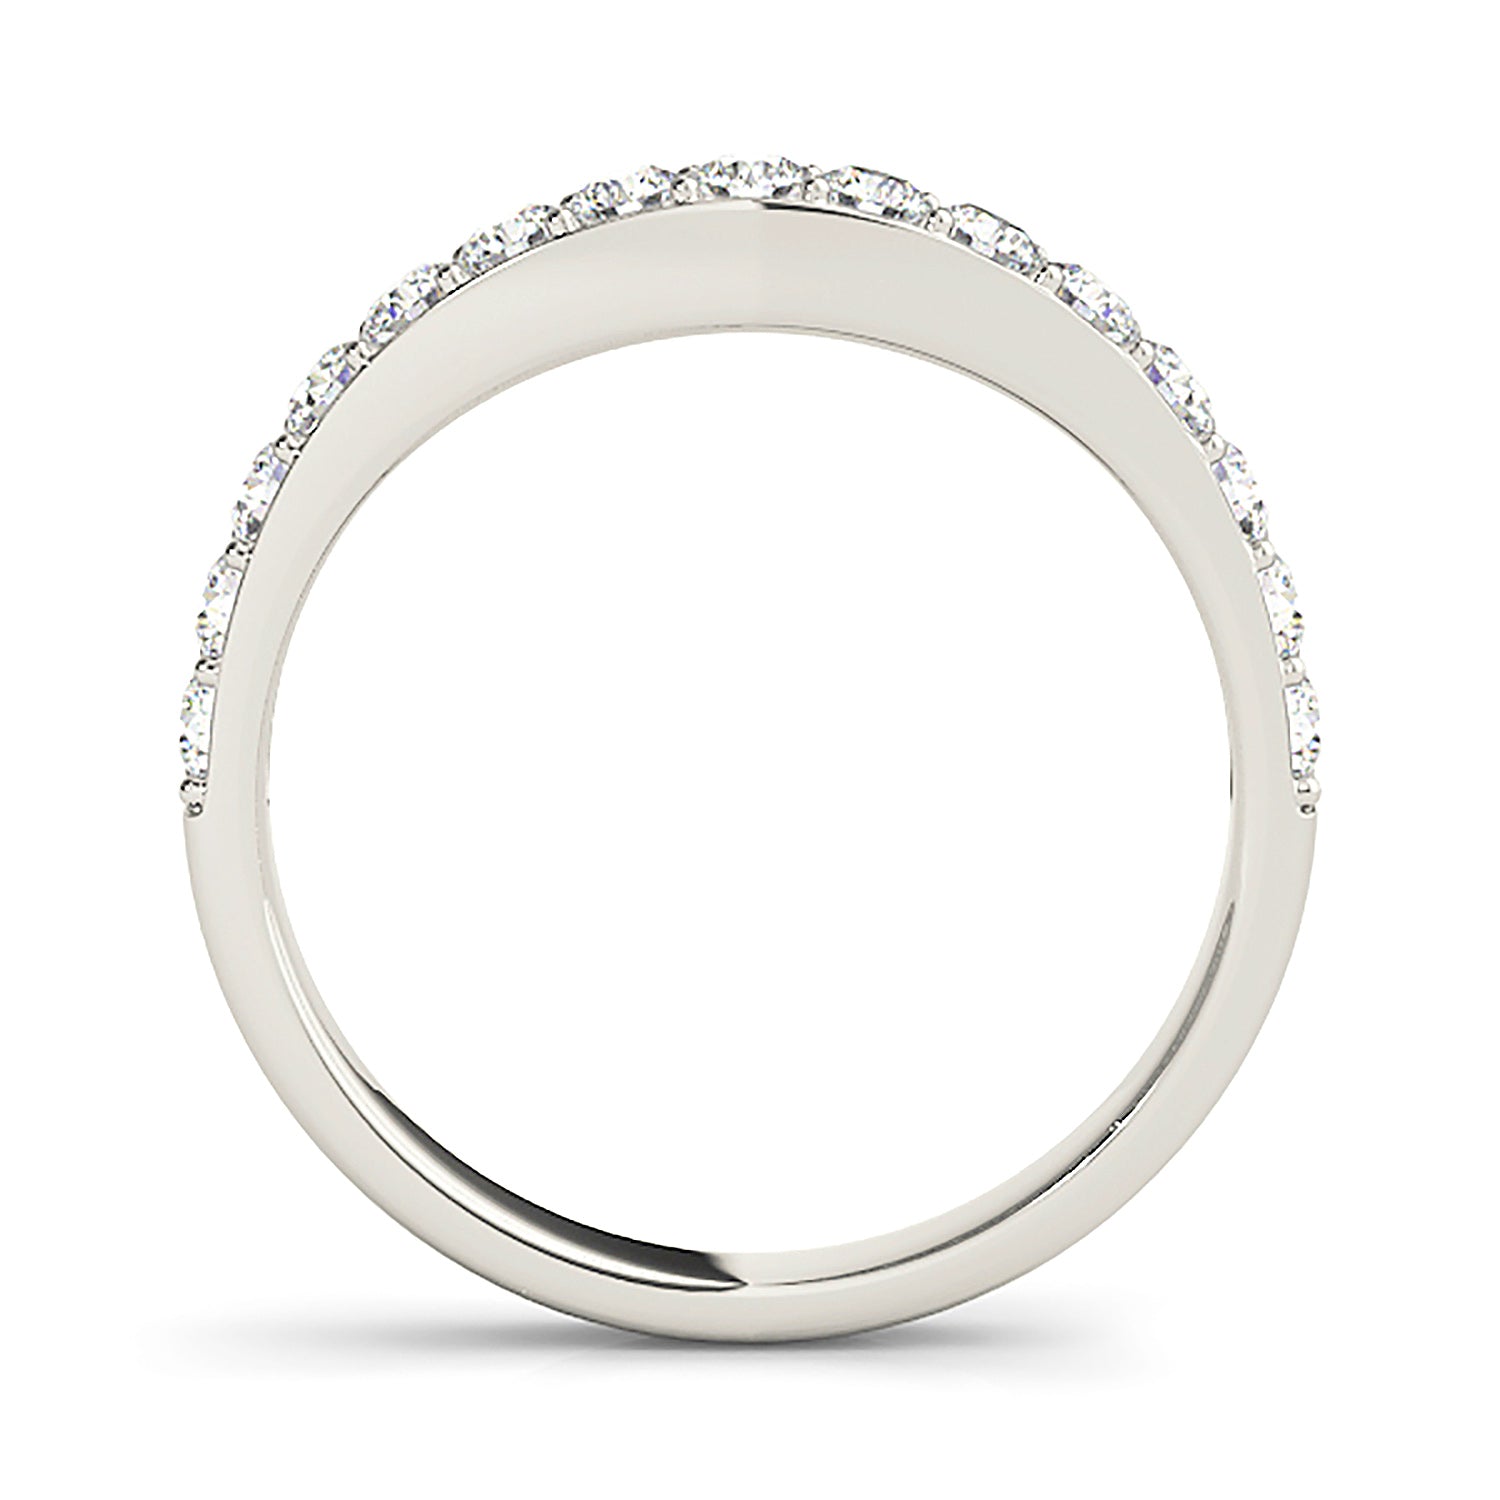 Diamond Wedding Band - 14K/18k Solid White Gold / Platinum | Curved band Diamond Wedding Anniversary Ring | Modern Design-in 14K/18K White, Yellow, Rose Gold and Platinum - Christmas Jewelry Gift -VIRABYANI